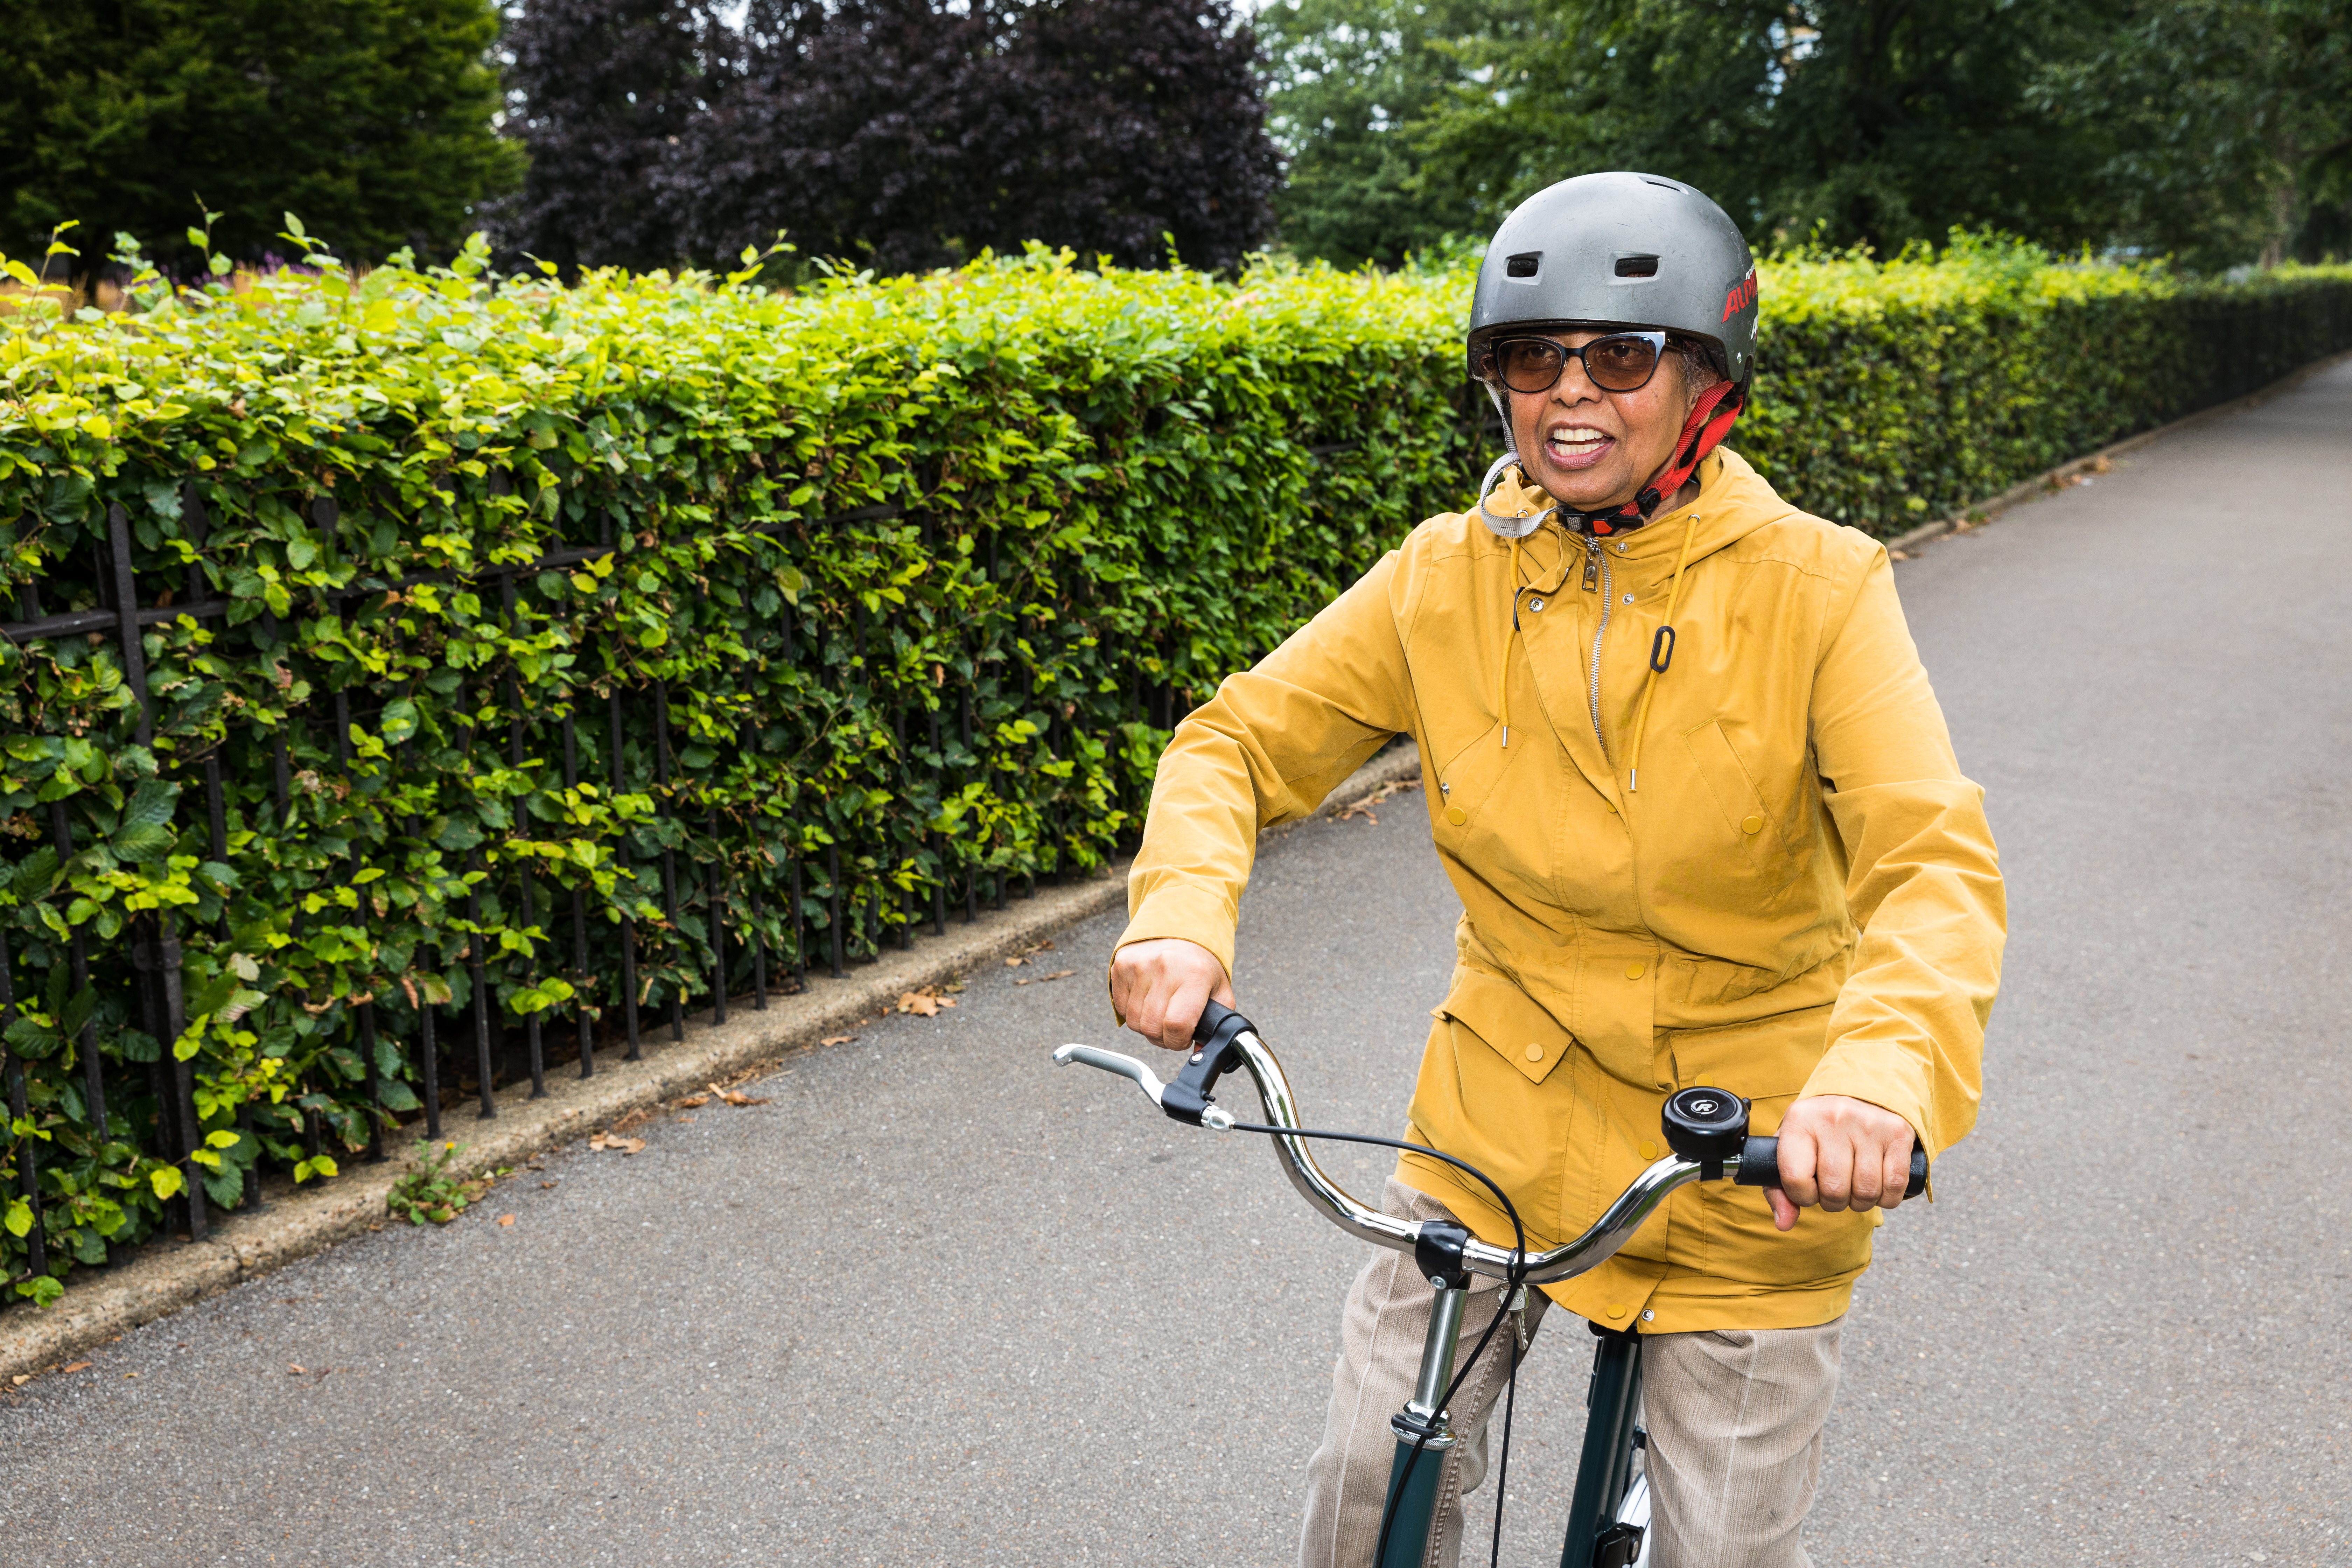 health, lady in a yellow raincoat, lady riding bike